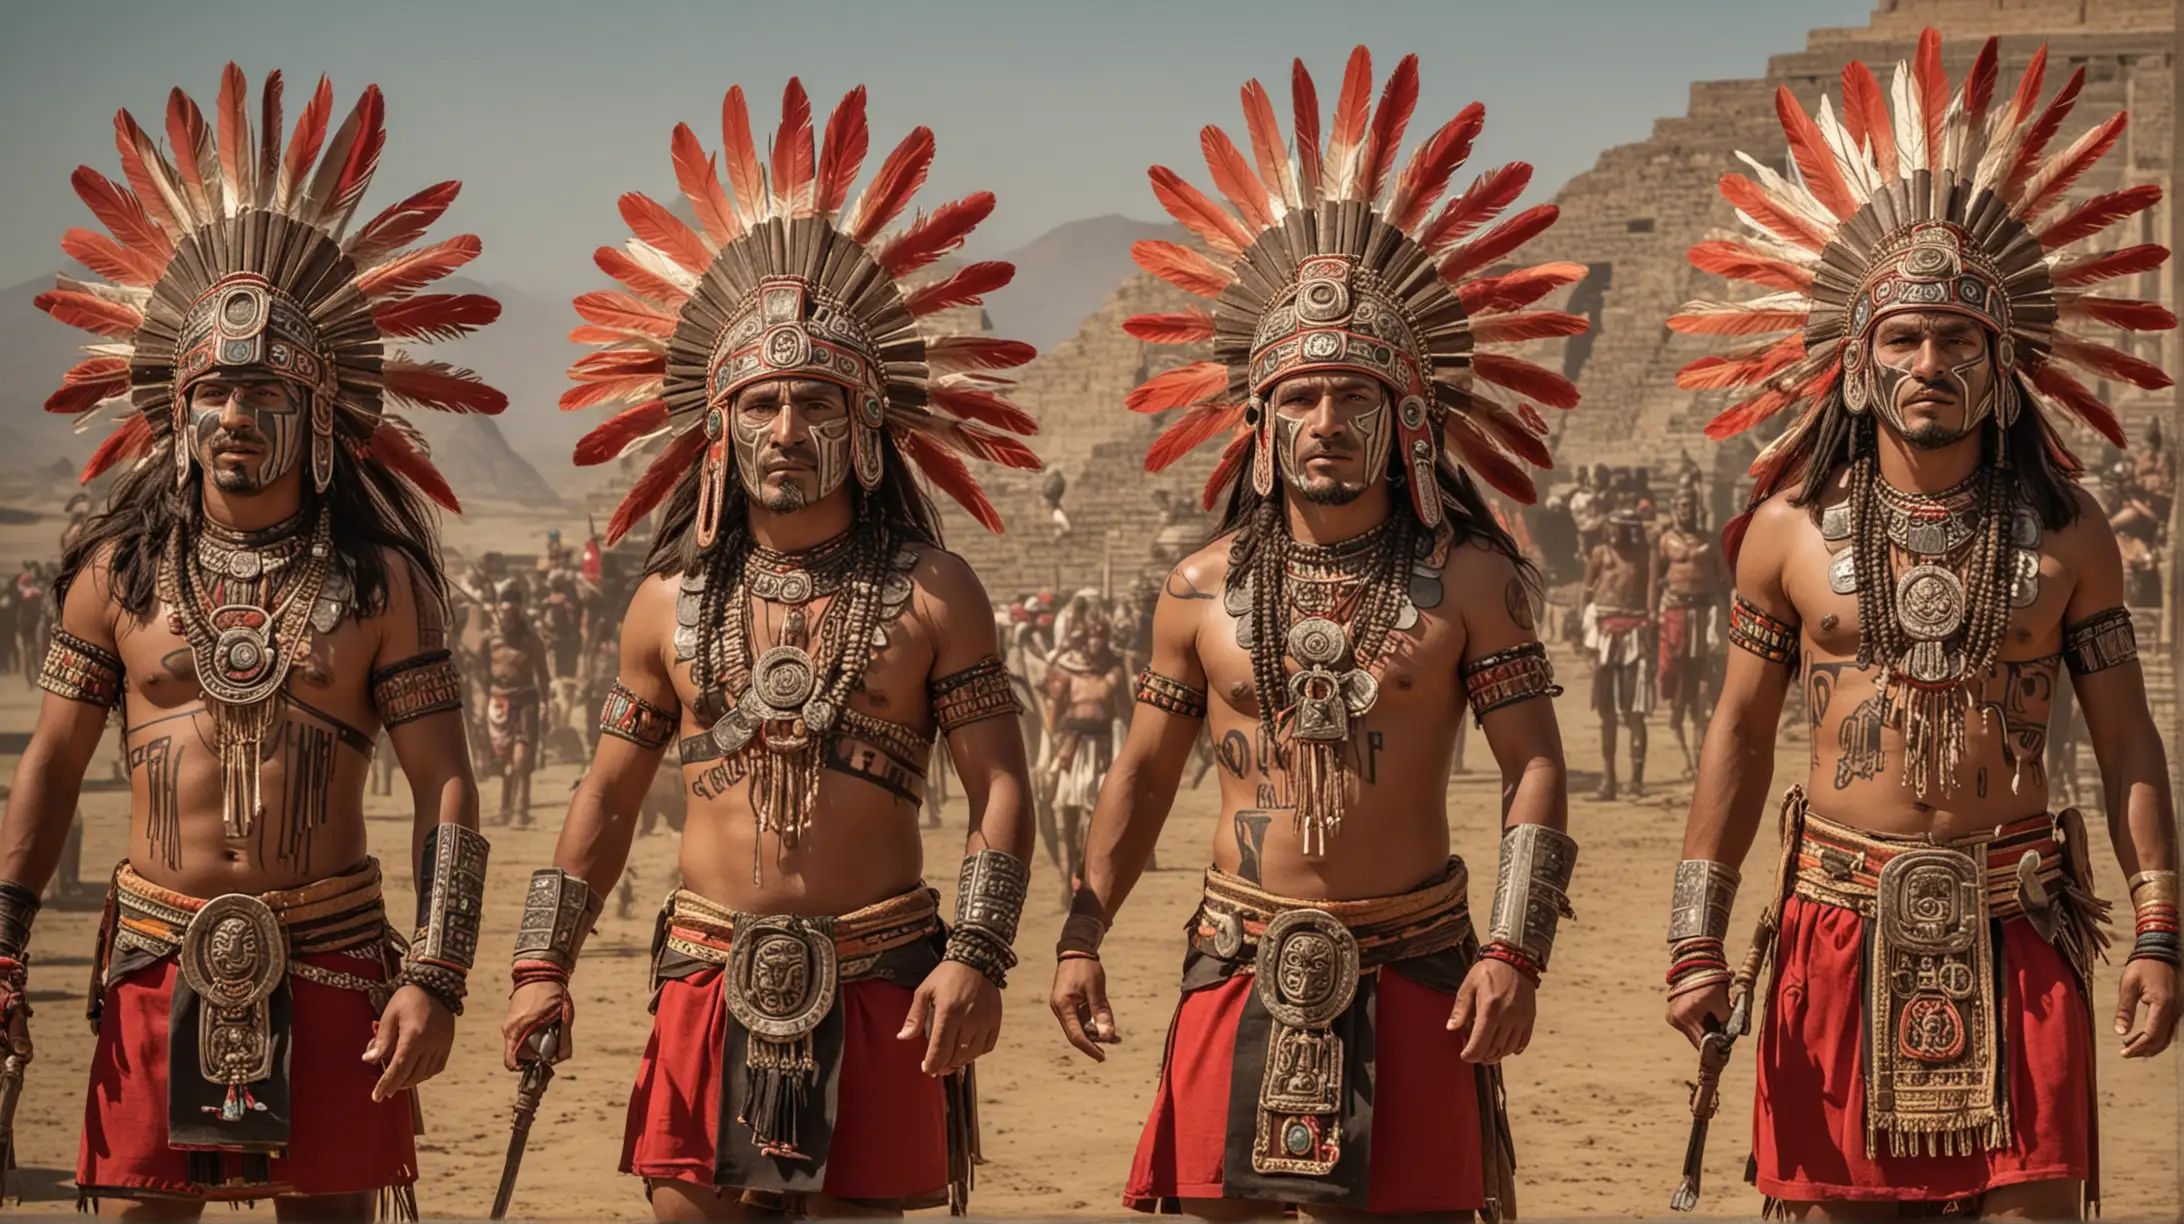 Realistic Photo of Aztec People Performing Religious Rites